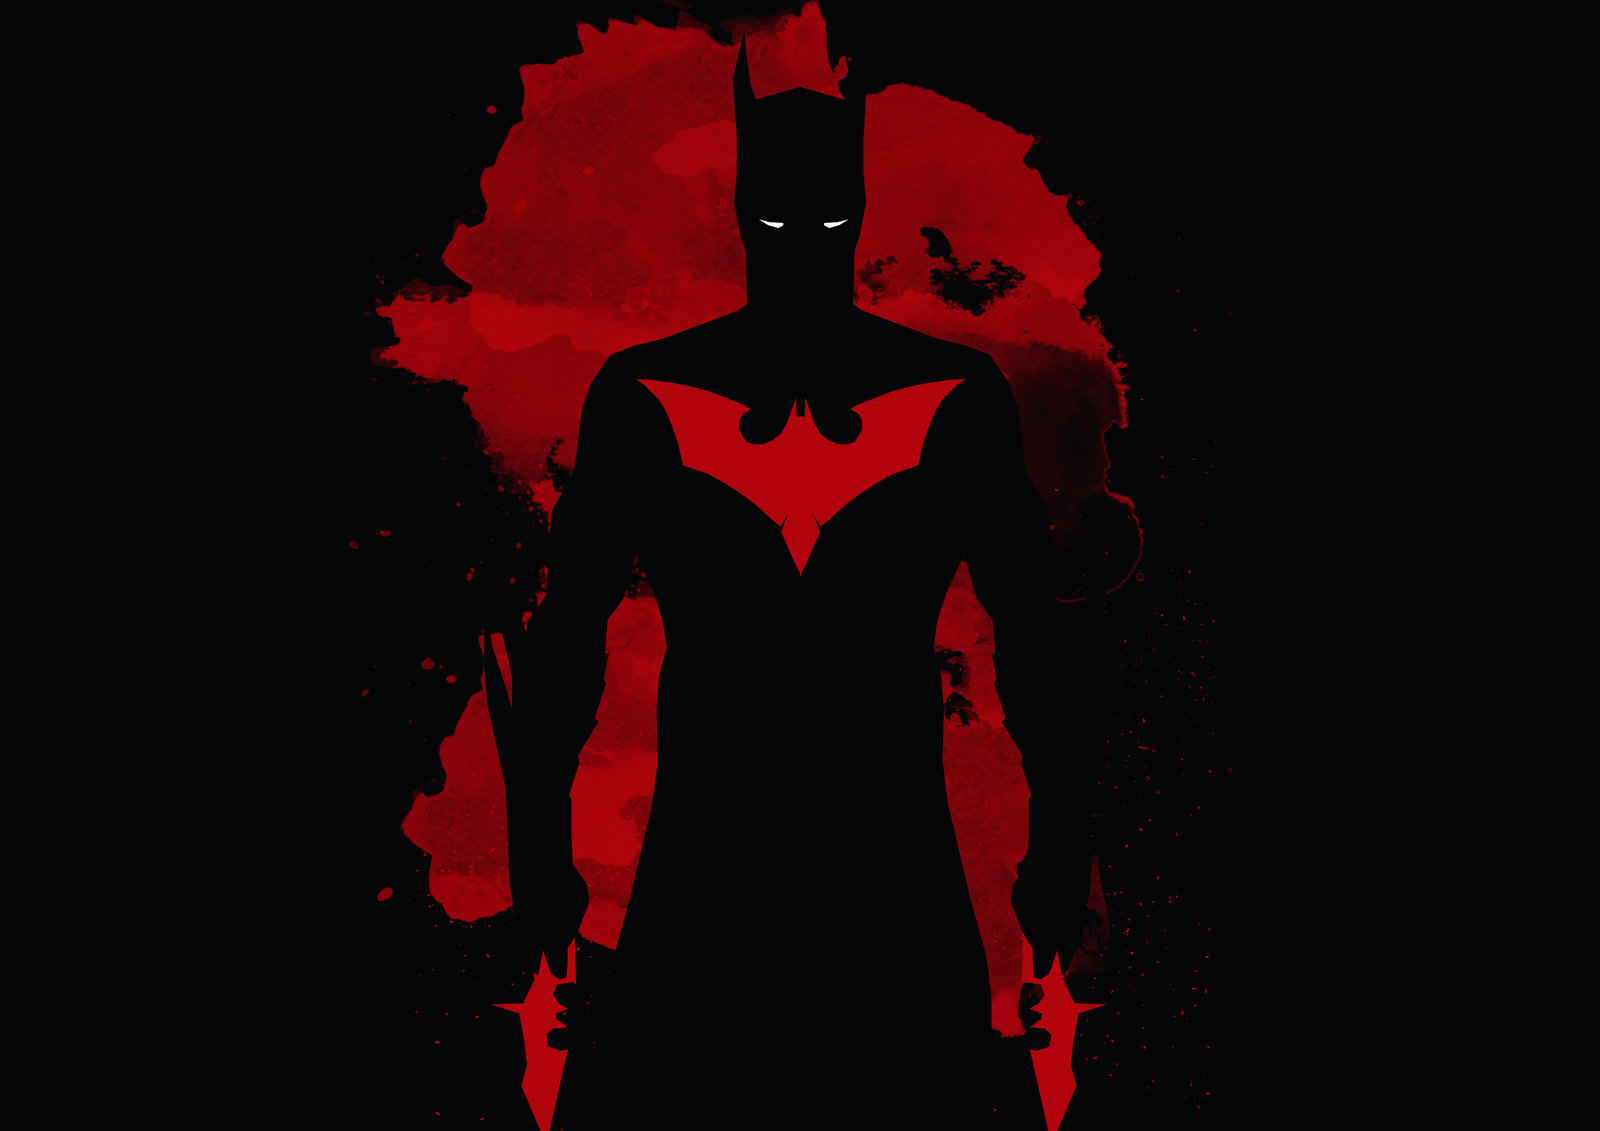 Batman Wallpaper Hd 1080p Free Download For Mobile